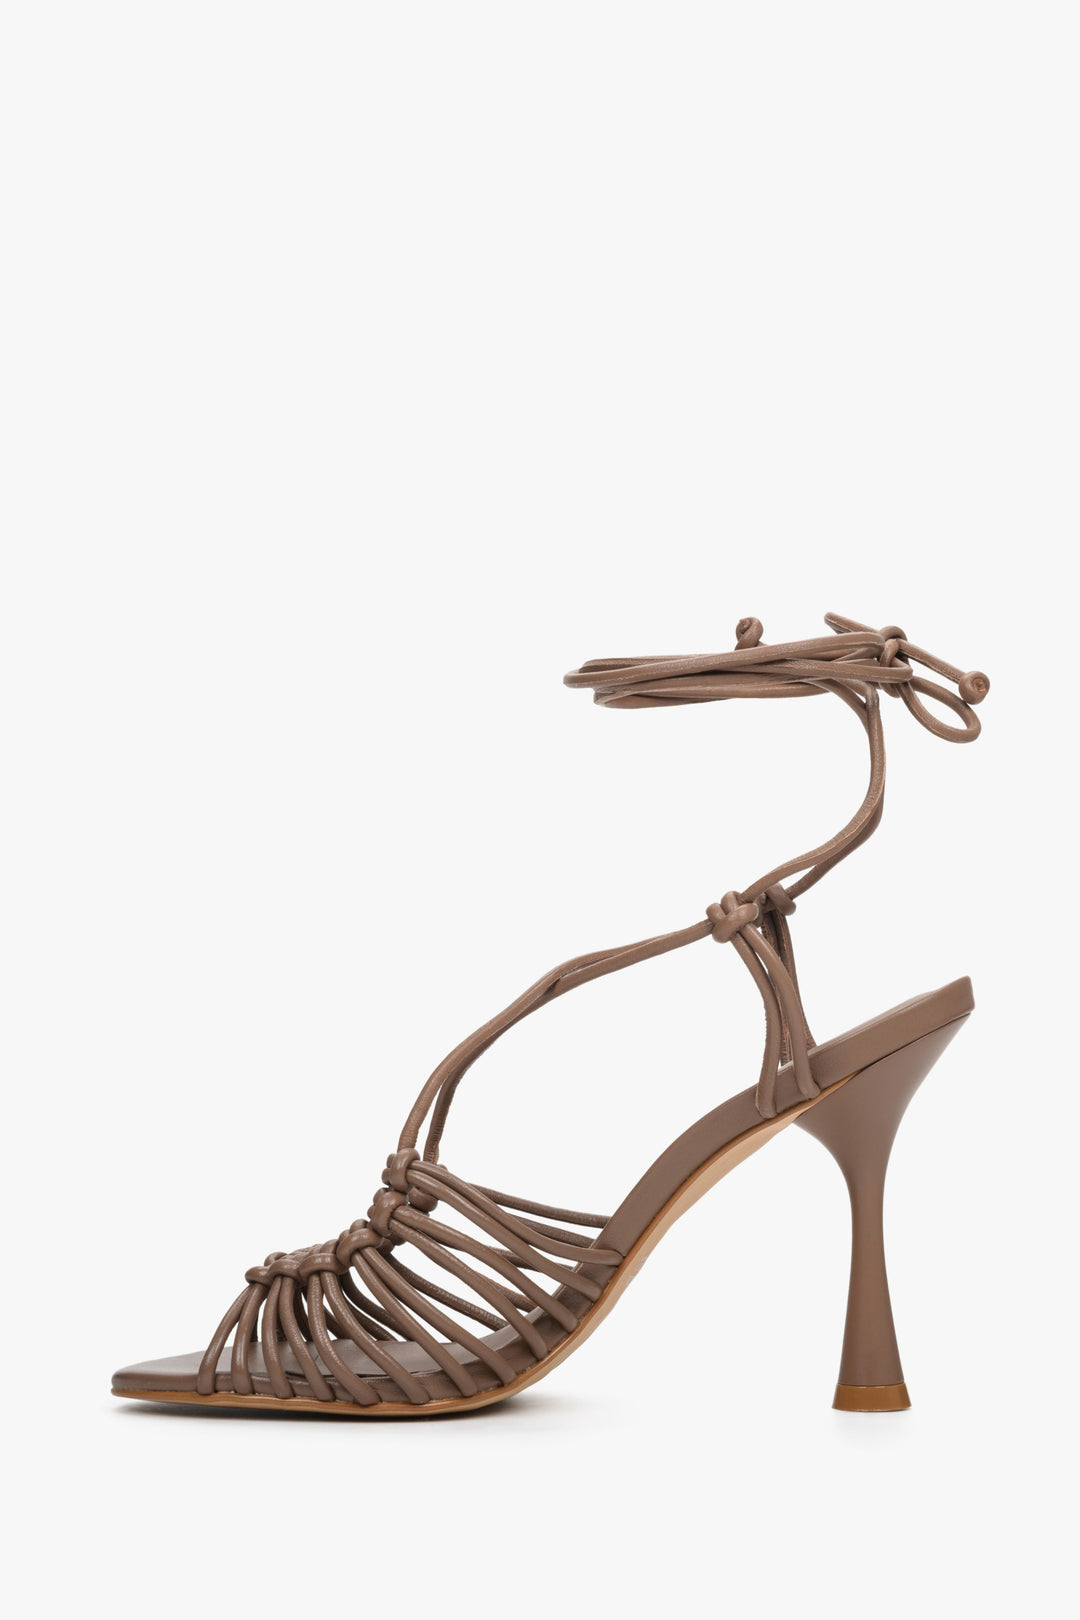 Women's brown leather lace-up sandals by Estro - shoe profile.